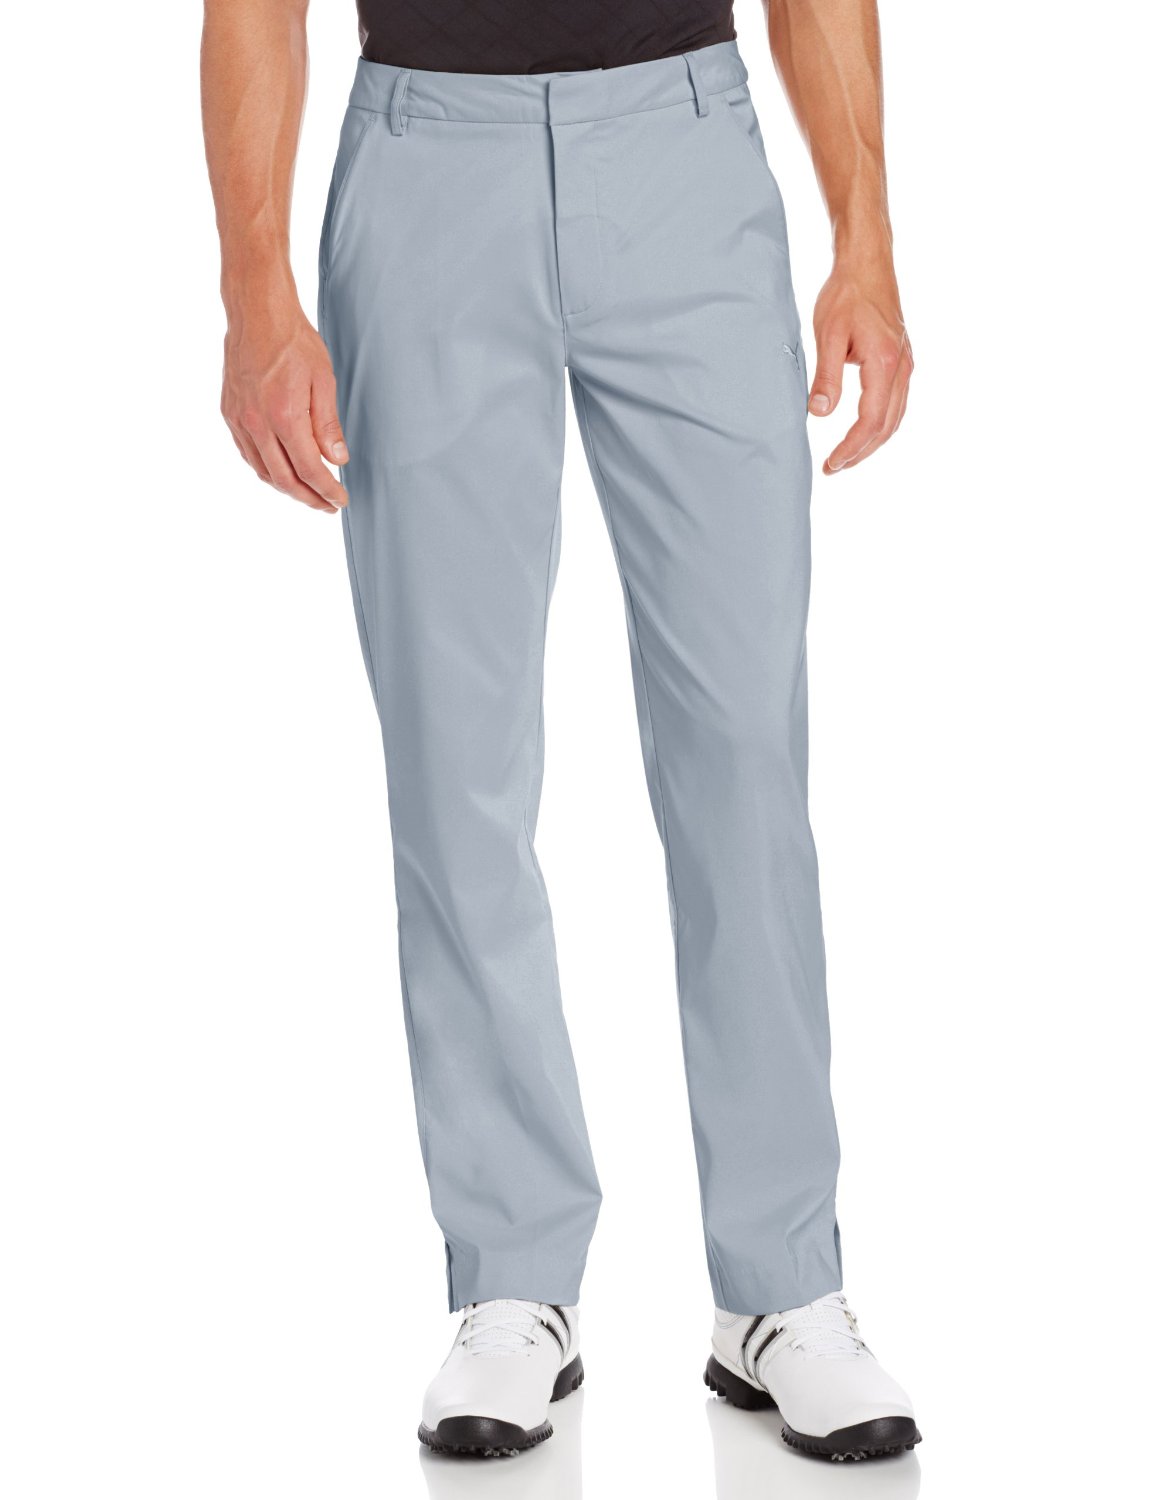 Puma NA Tech Style Golf Pants